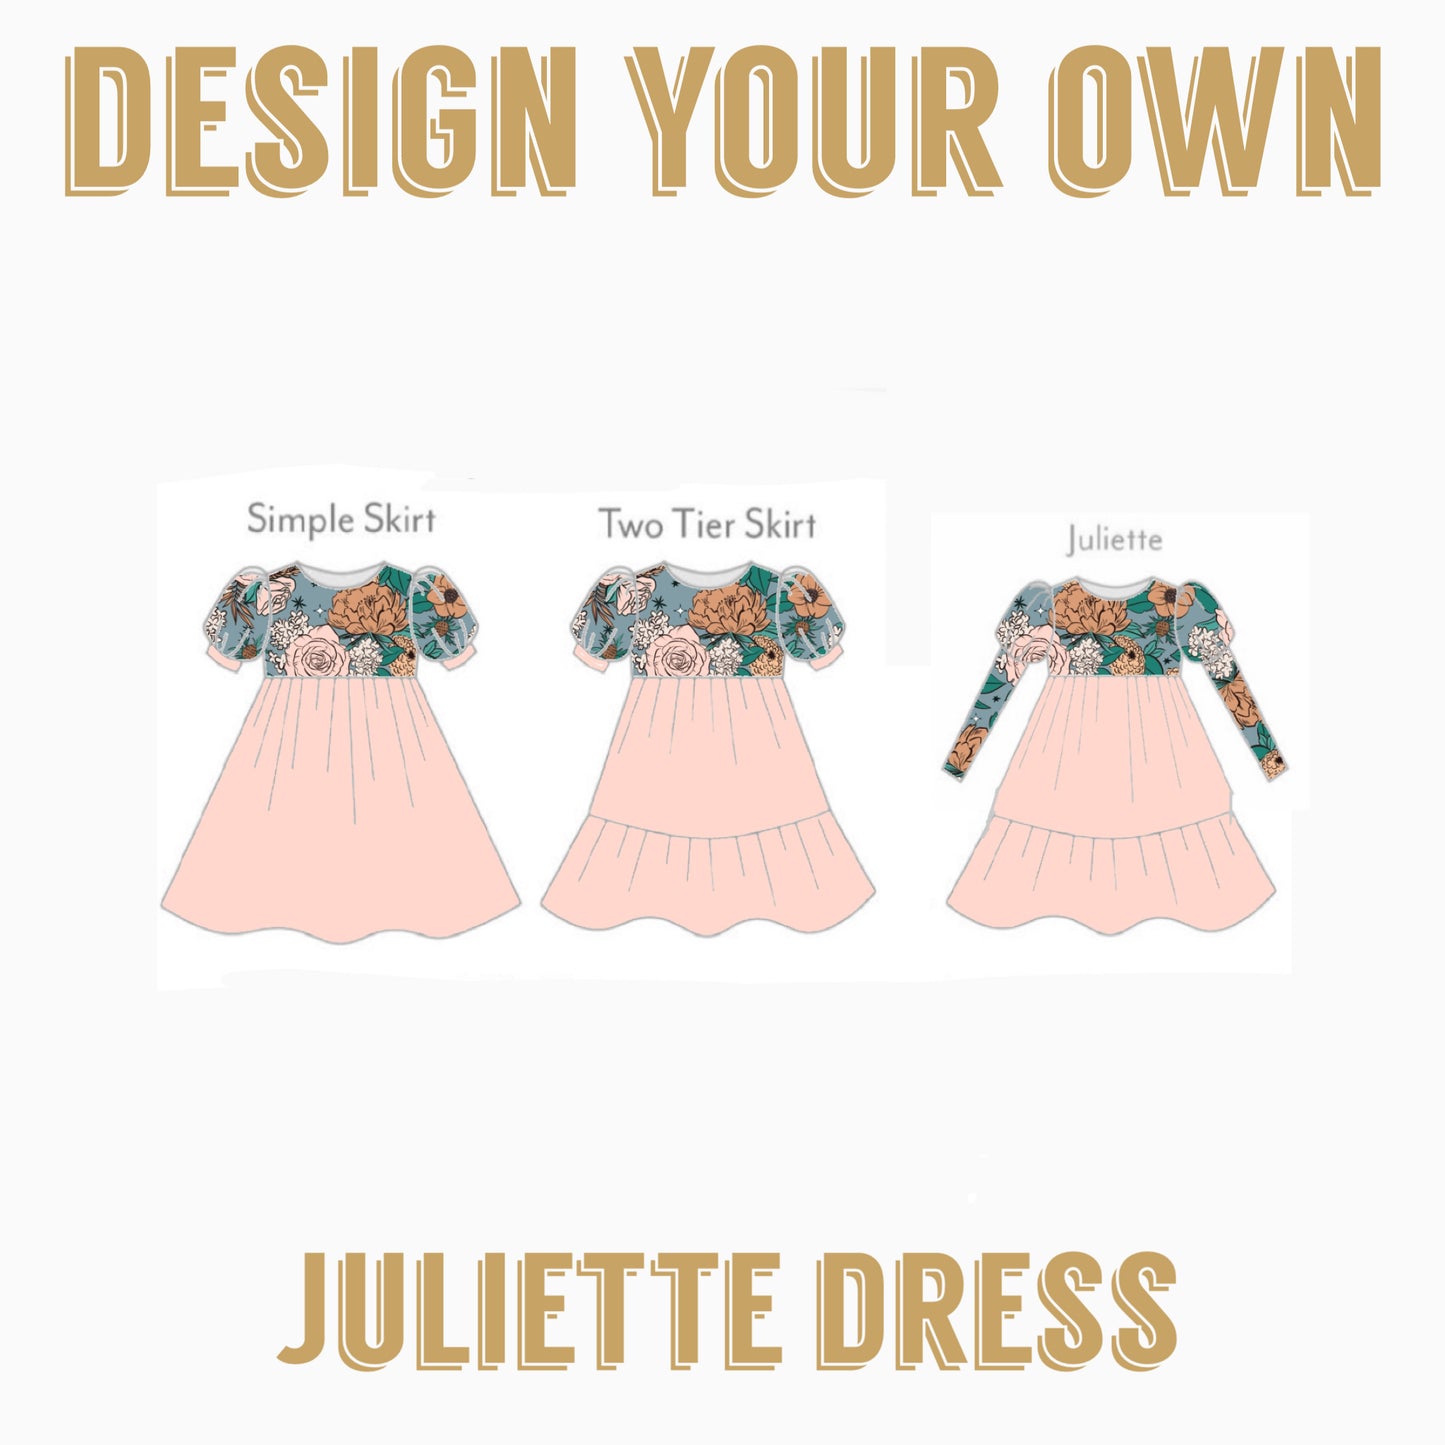 Design your own | Juliette Dress